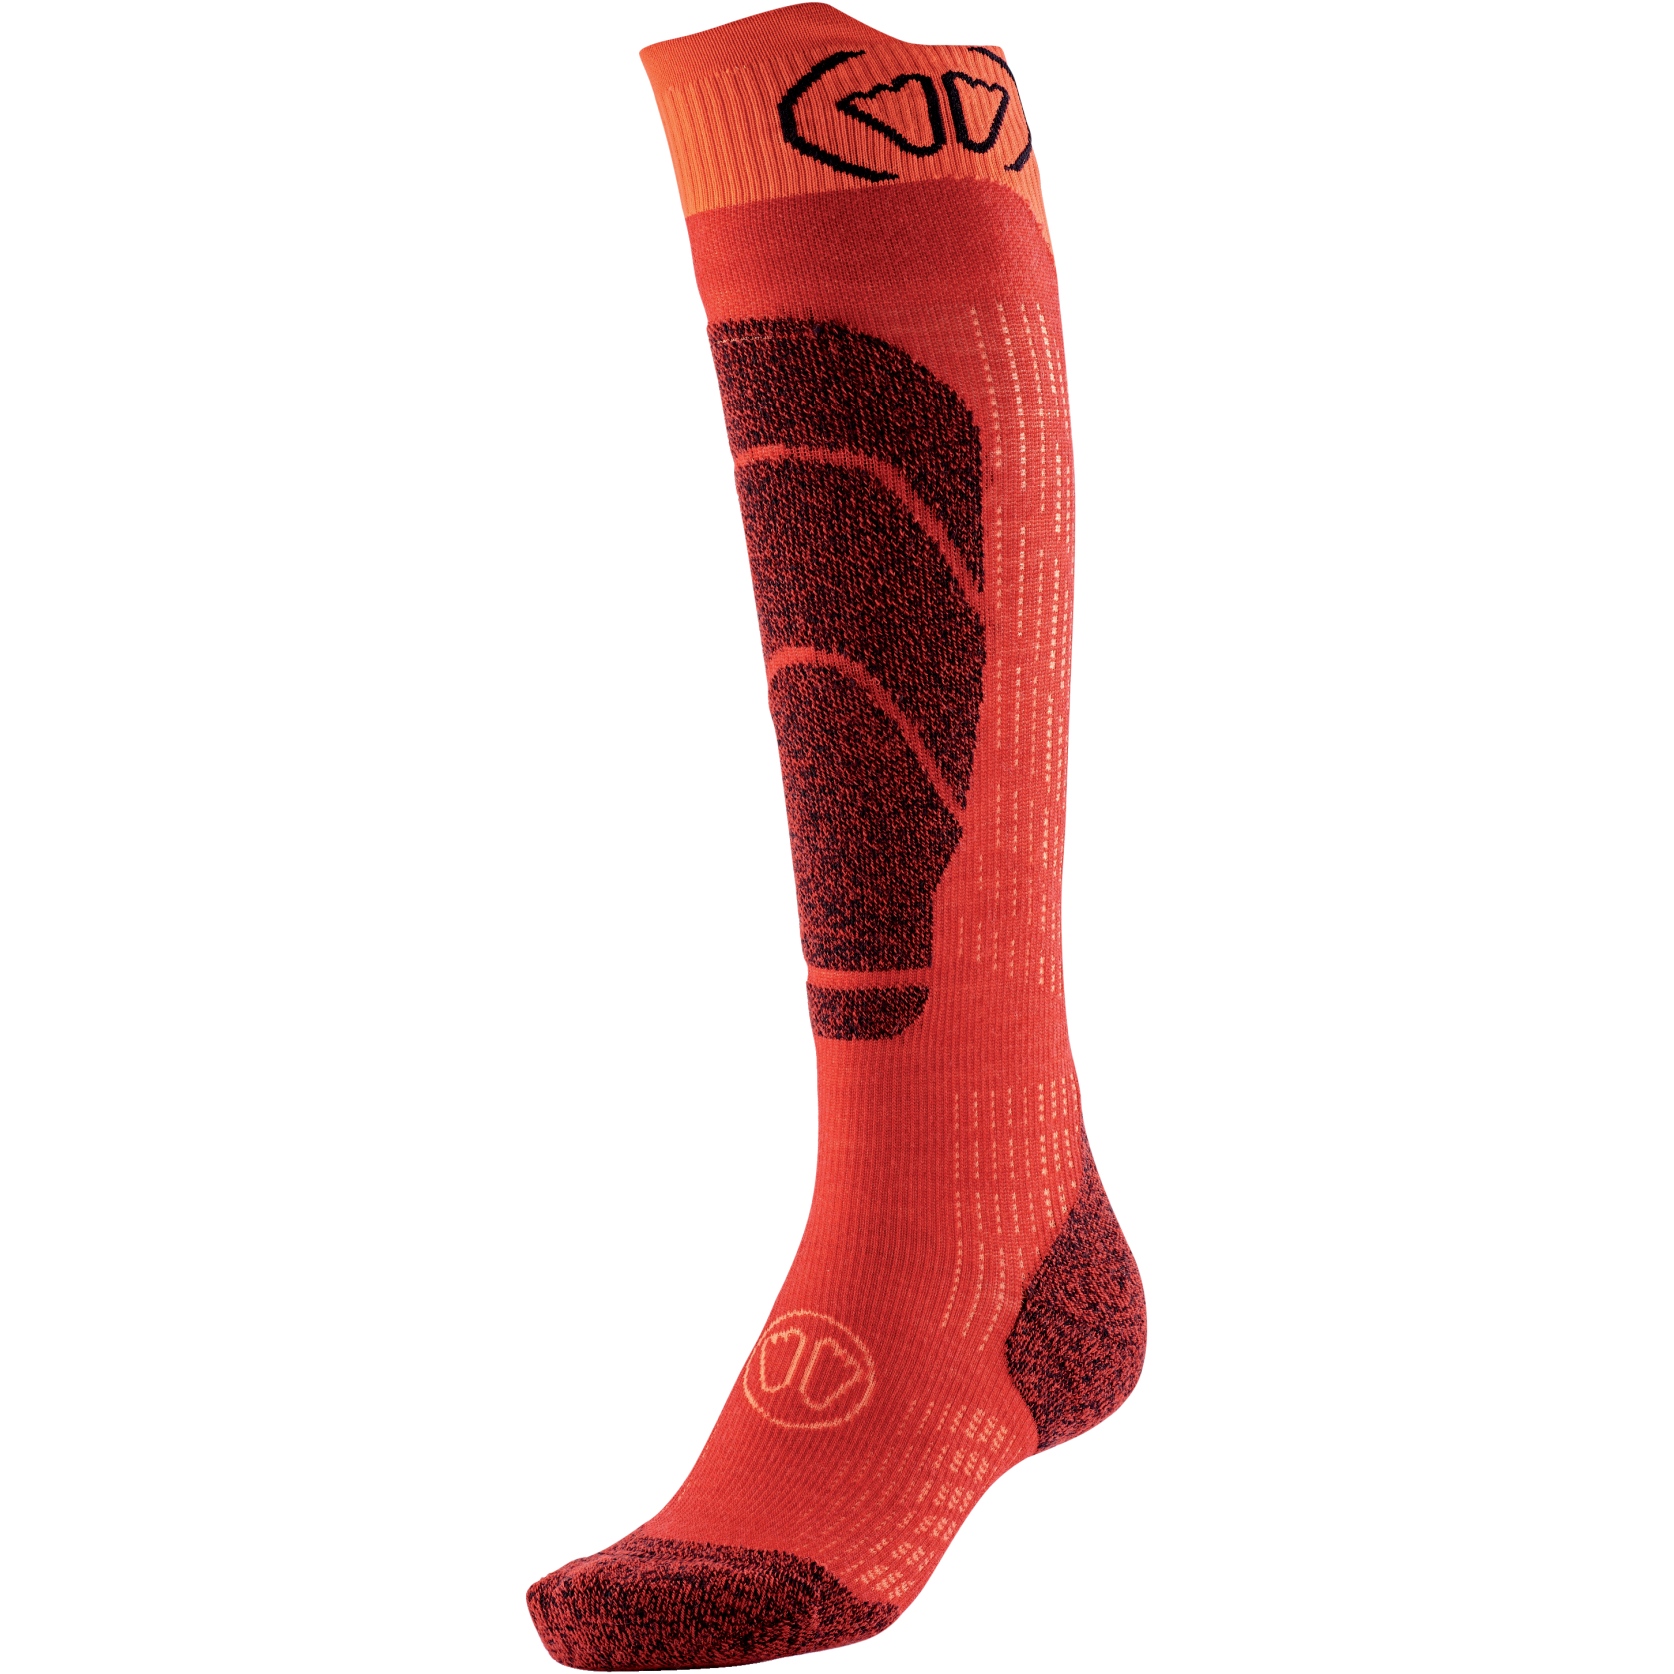 Picture of Sidas Ski Merino Junior Ski Socks - red/orange